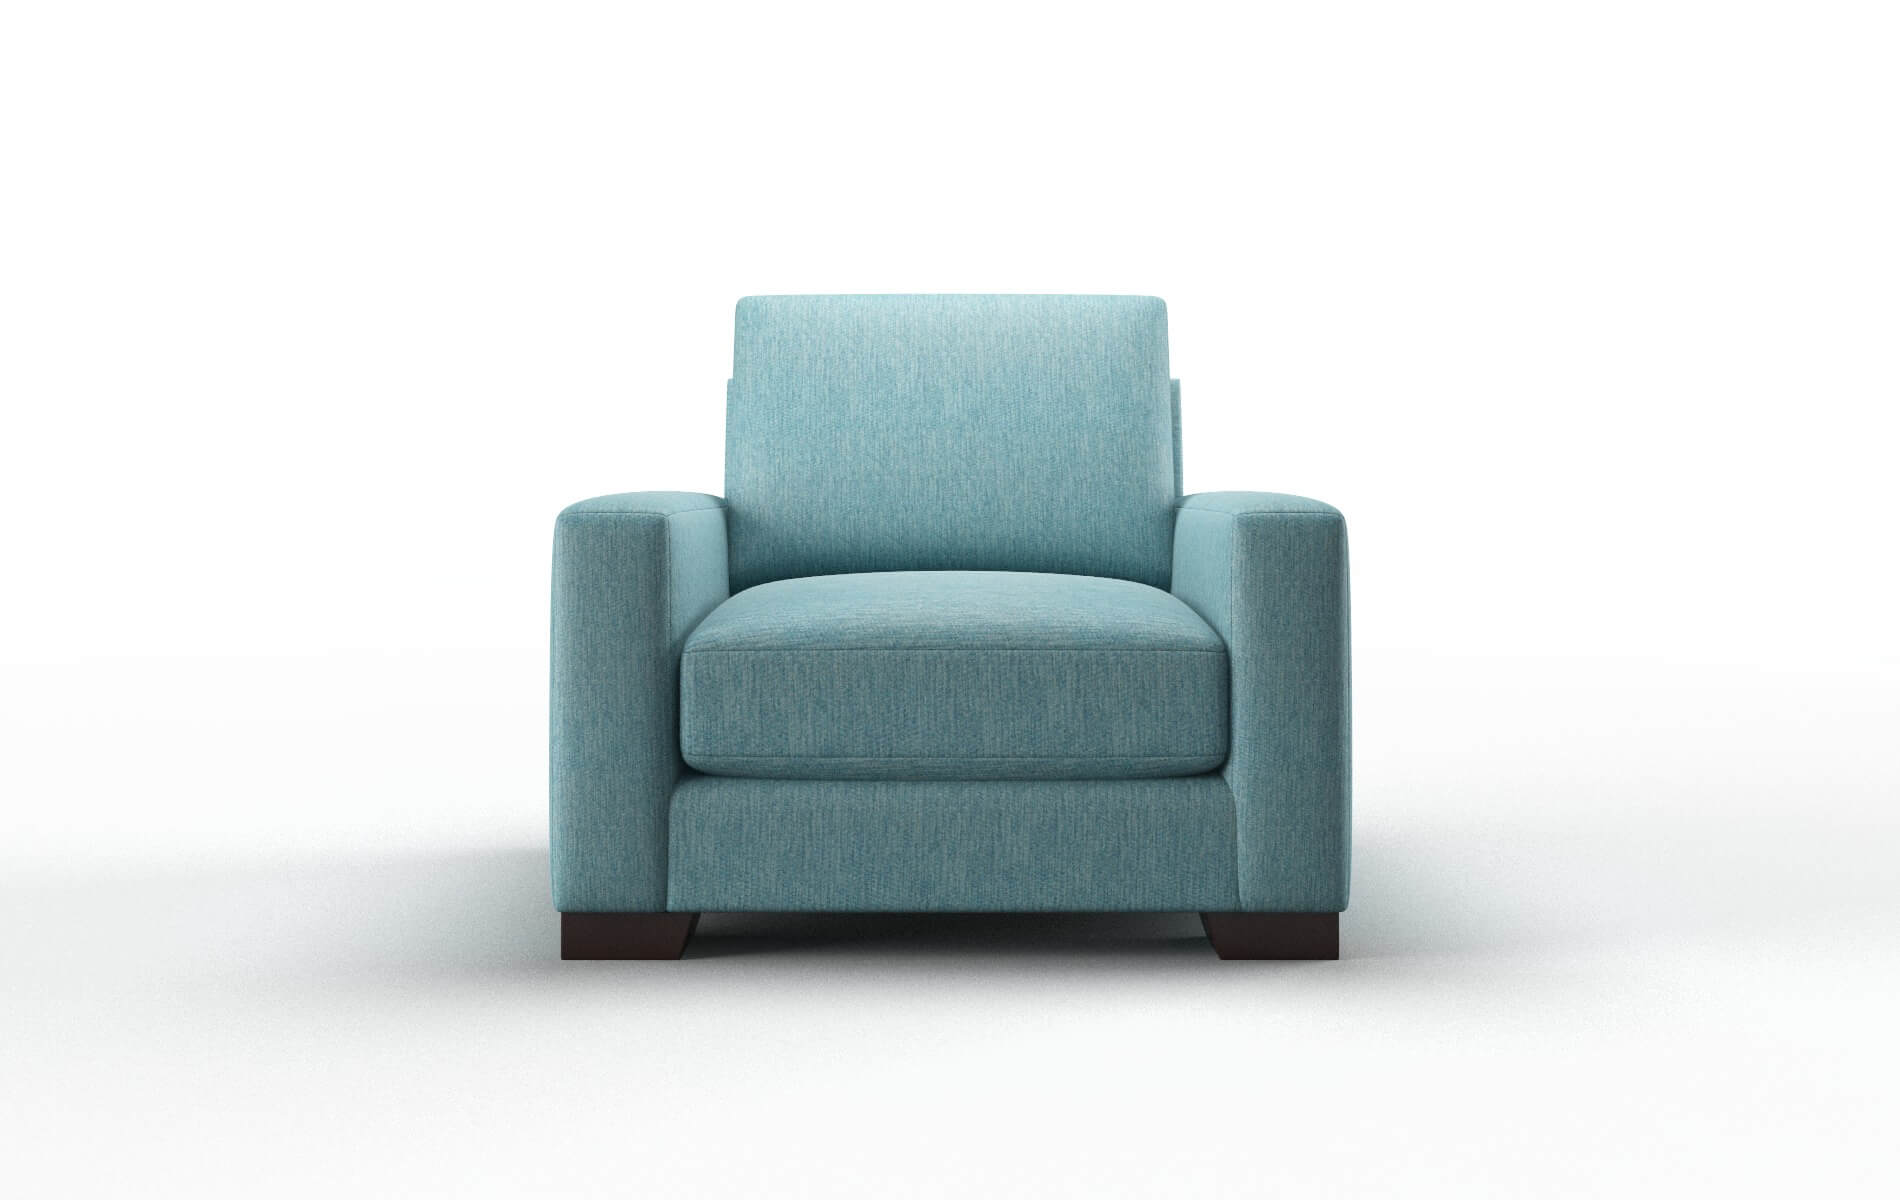 London Cosmo Turquoise chair espresso legs